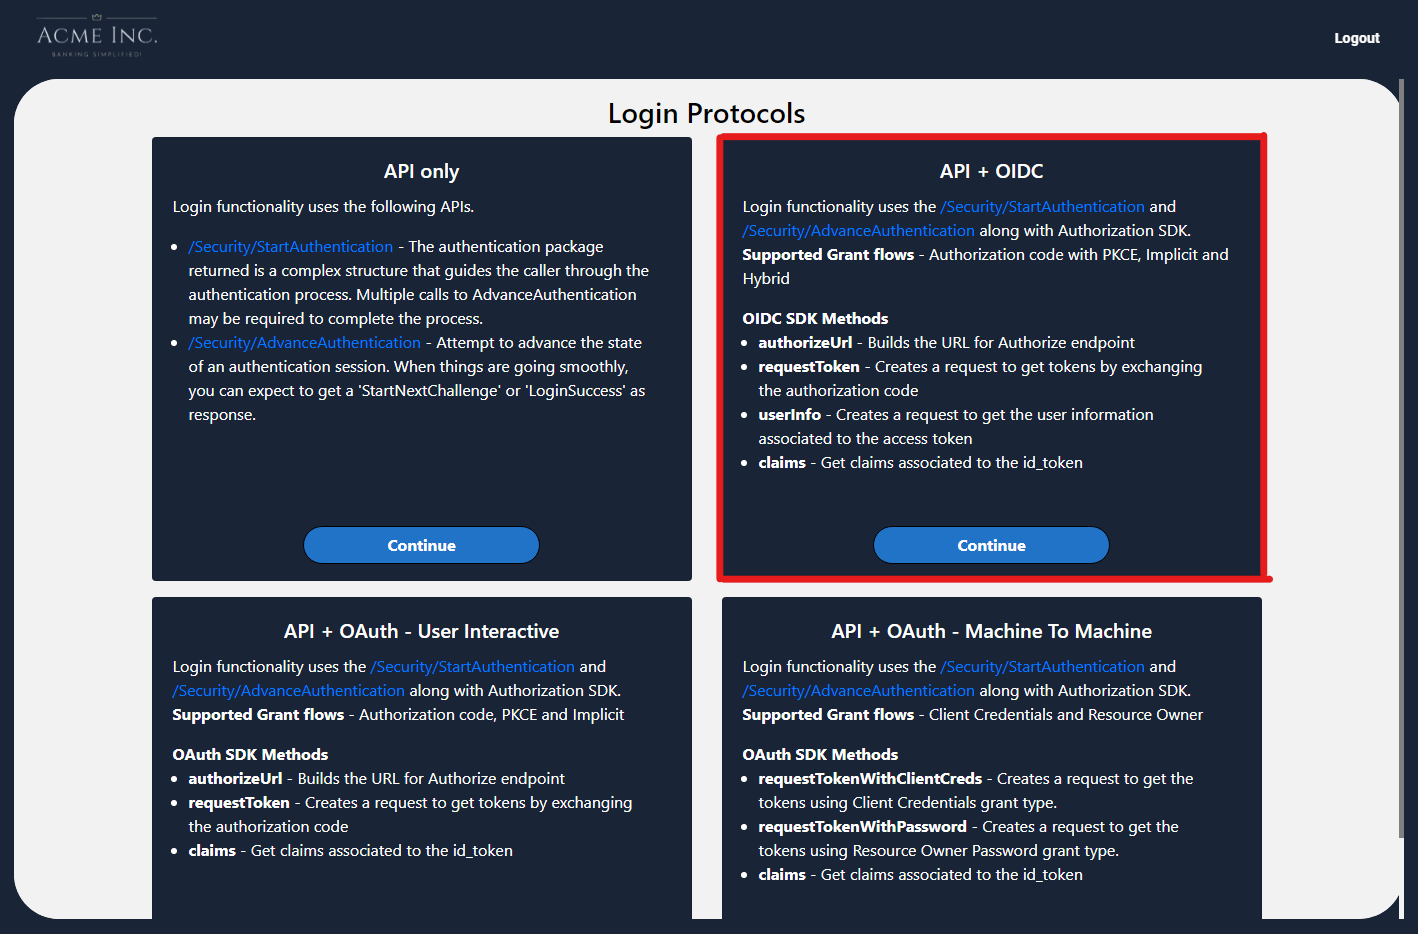 API + OIDC card in the login protocols screen